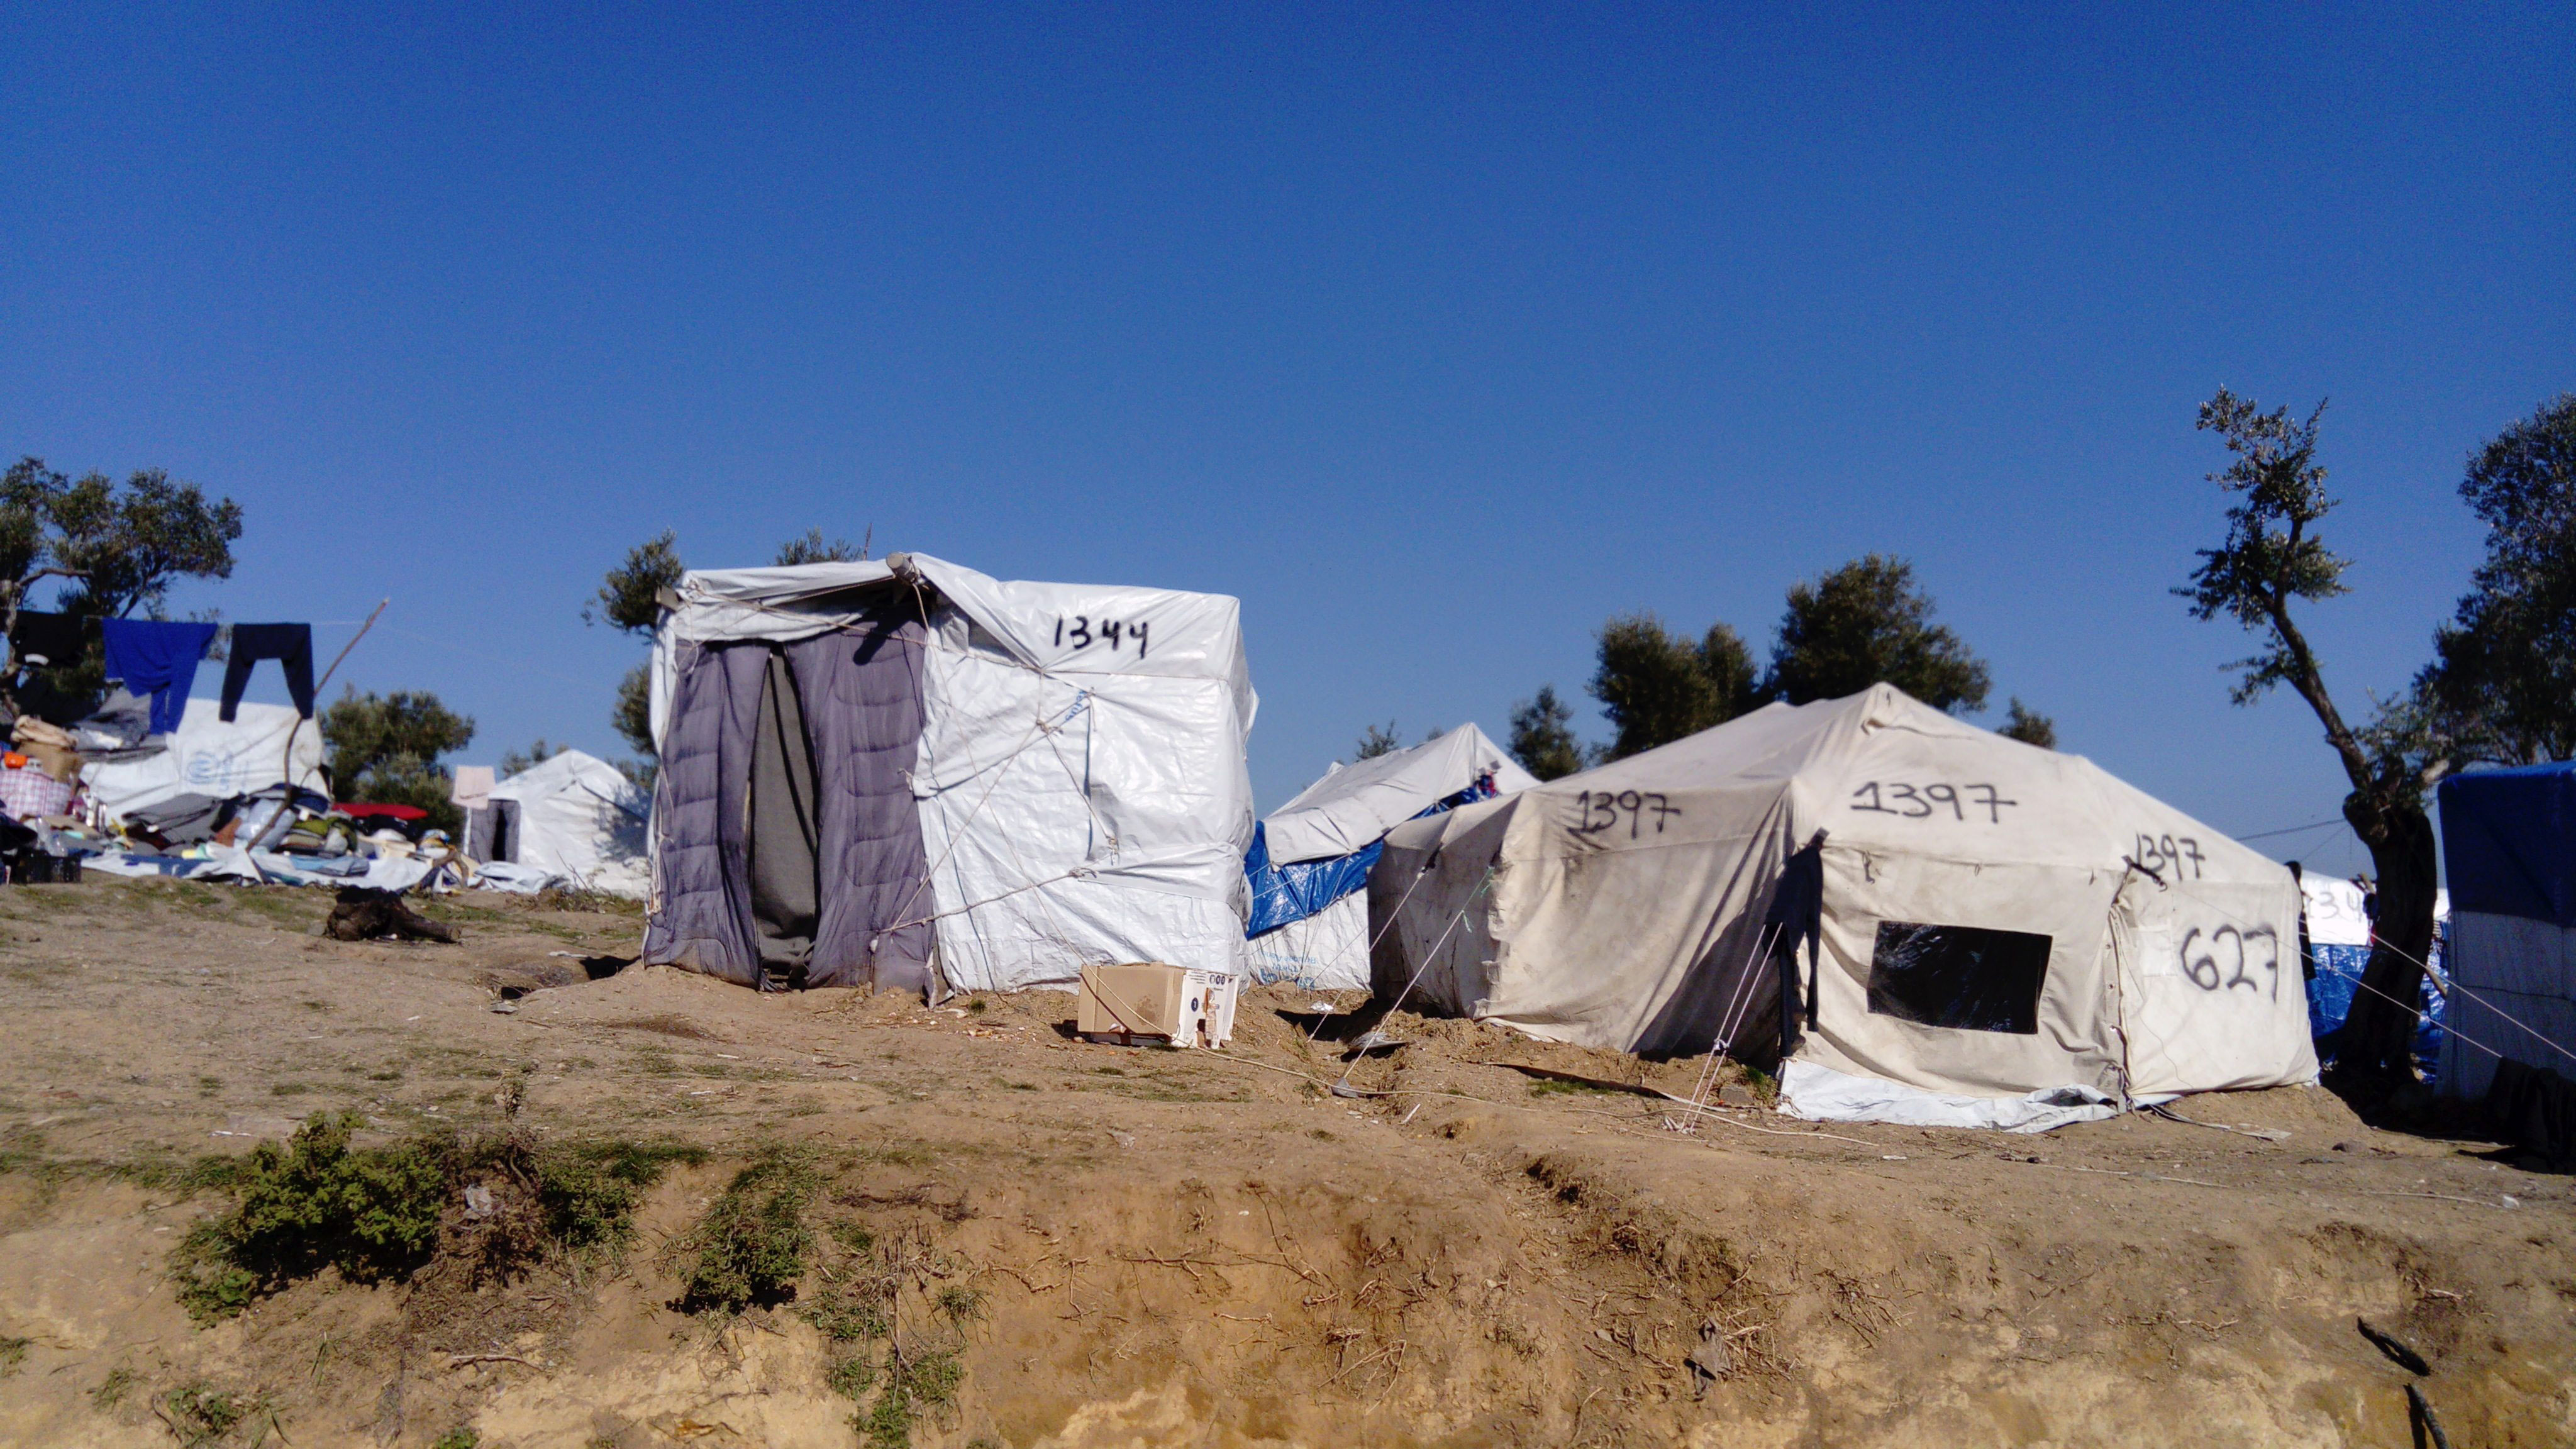 Tα νησιά του Αιγαίου και πάλι στο «κόκκινο»: Ως πότε αυτός ο φαύλος κύκλος; / Greek, EU authorities urged to break ‘vicious cycle’ of overcrowded asylum-seeker hotspots